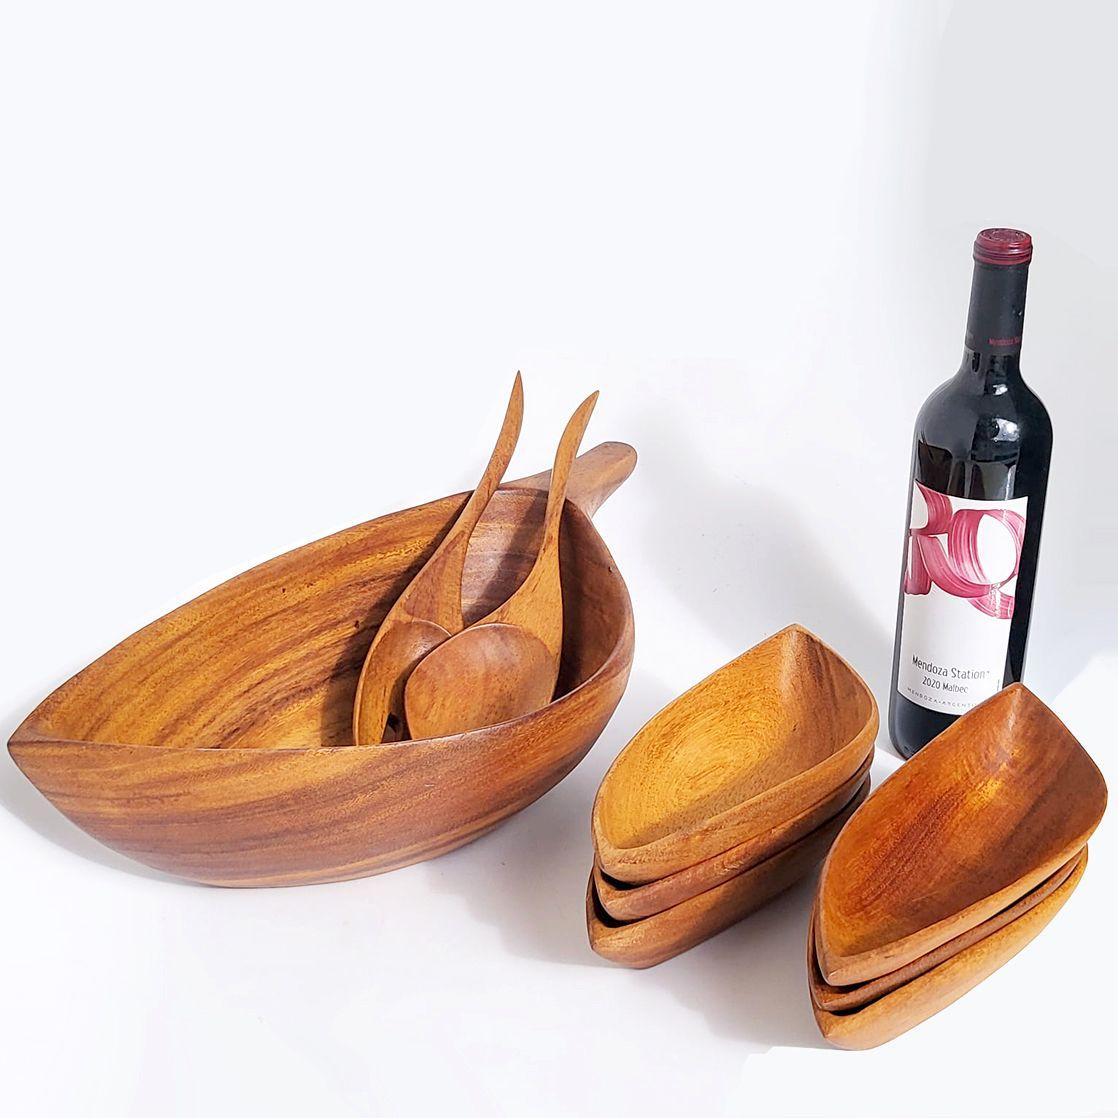 Organic Modern Arthur Umanoff Midcentury Carved Wood Salad Set, Bowls and Serving Utensils For Sale